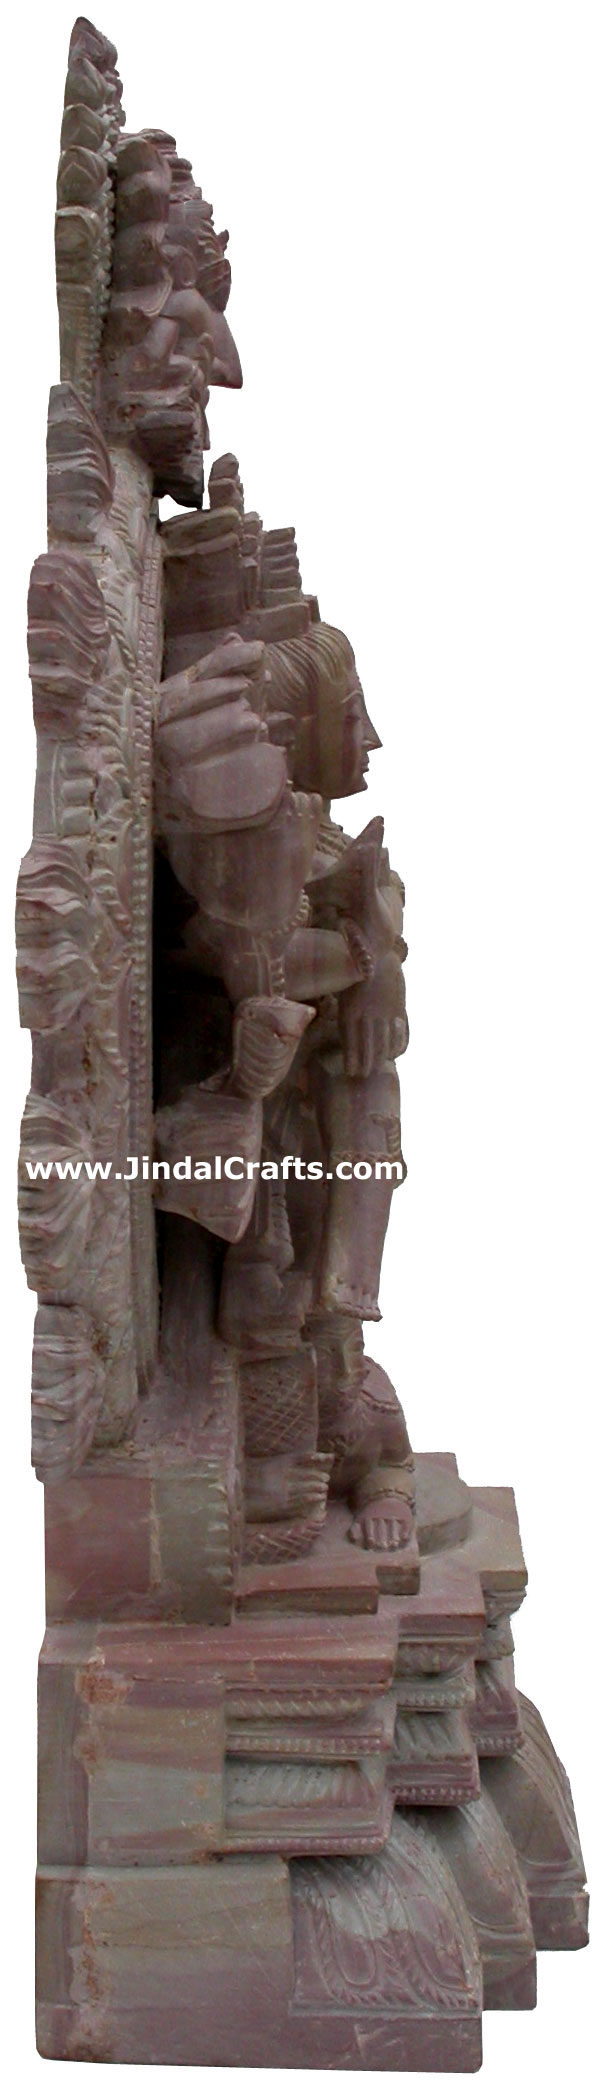 Lord Shiva Natraja Hand Carved Stone Statue Sculpture Figure Hindu Religious Art